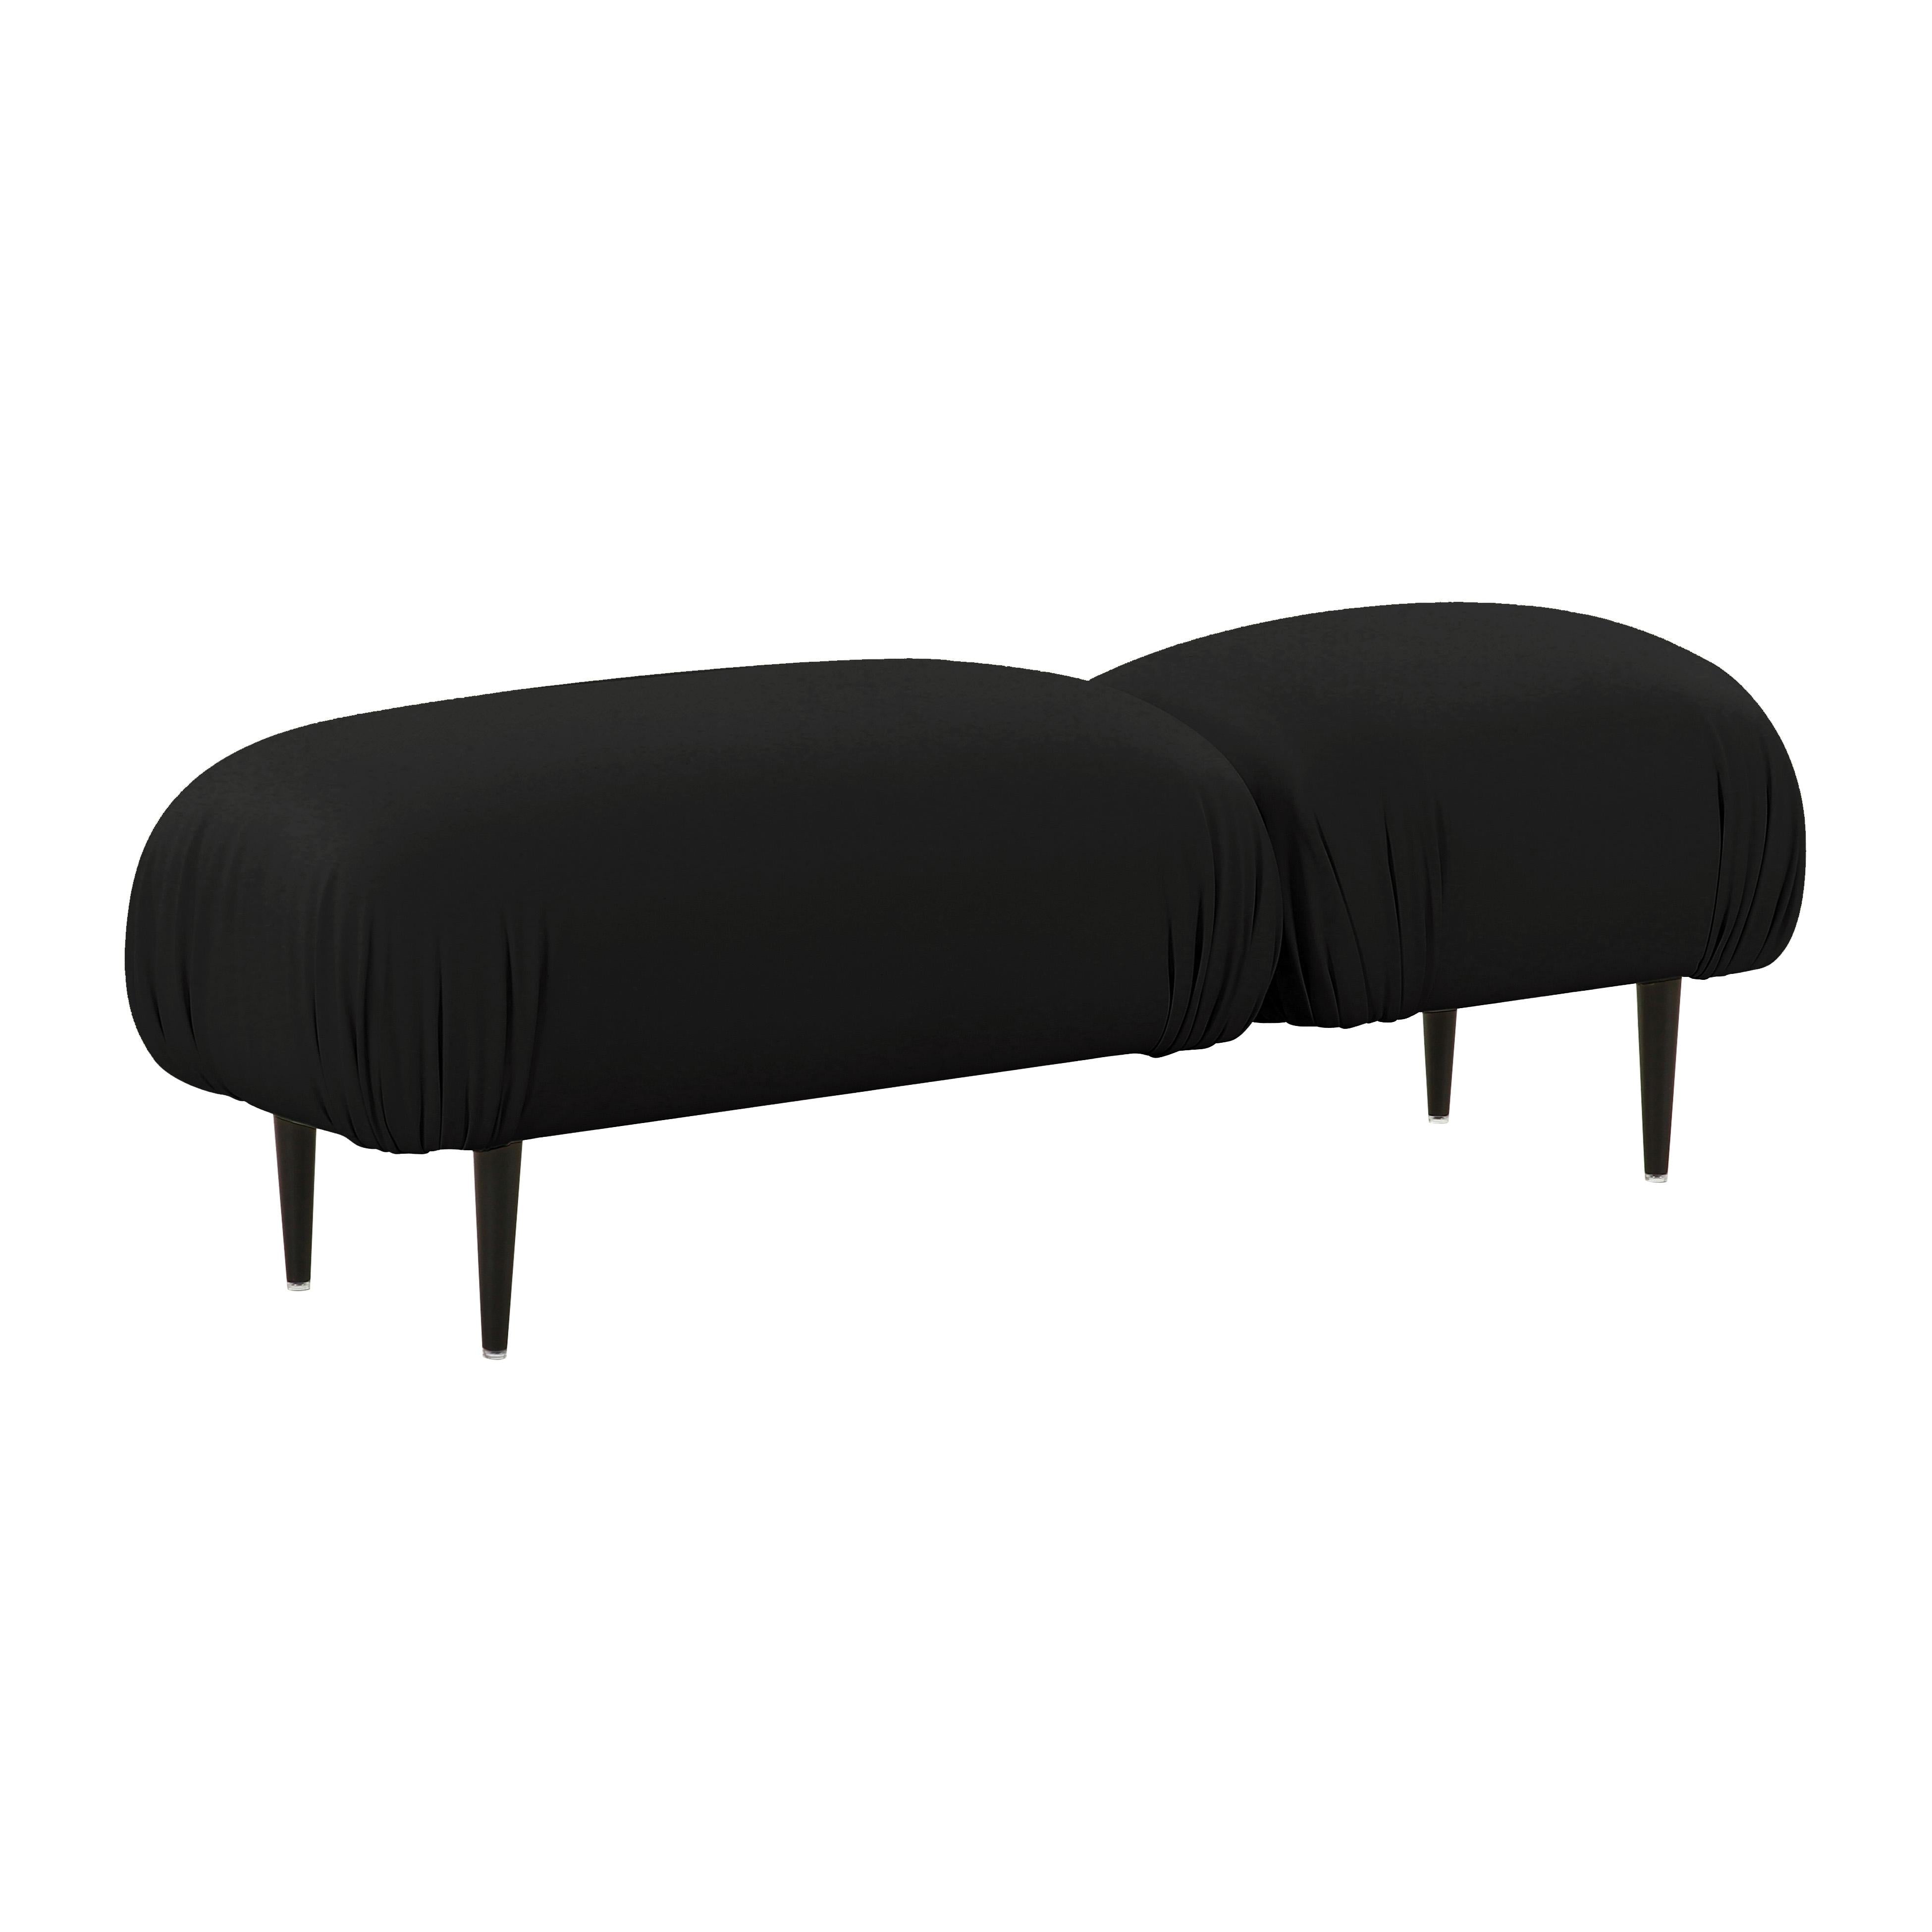 Tov Furniture Benches - Adalynn Black Vegan Leather Bench